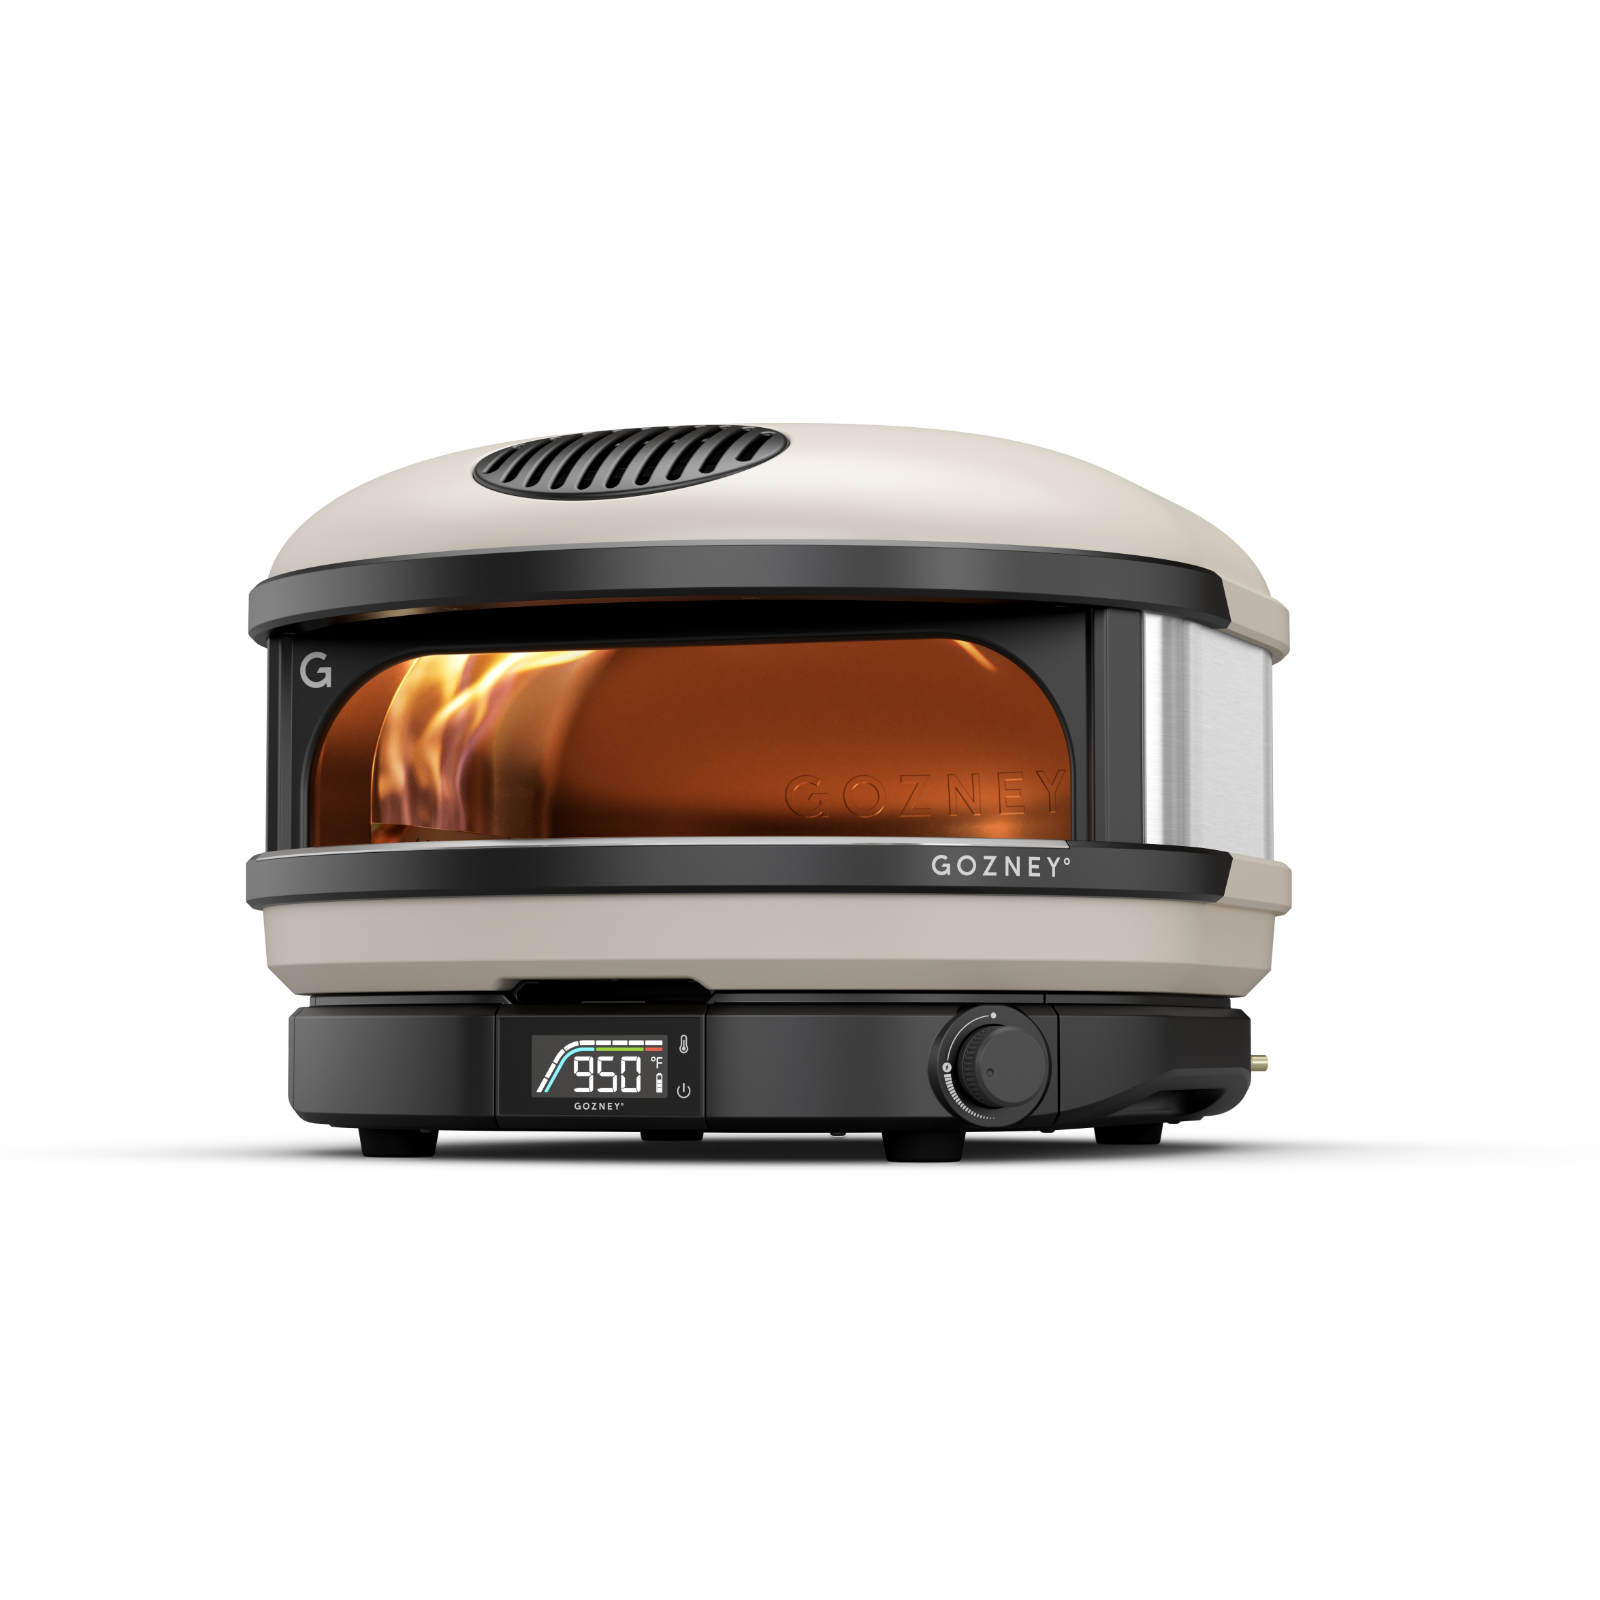 Gozney Arc Compact Pizza Oven